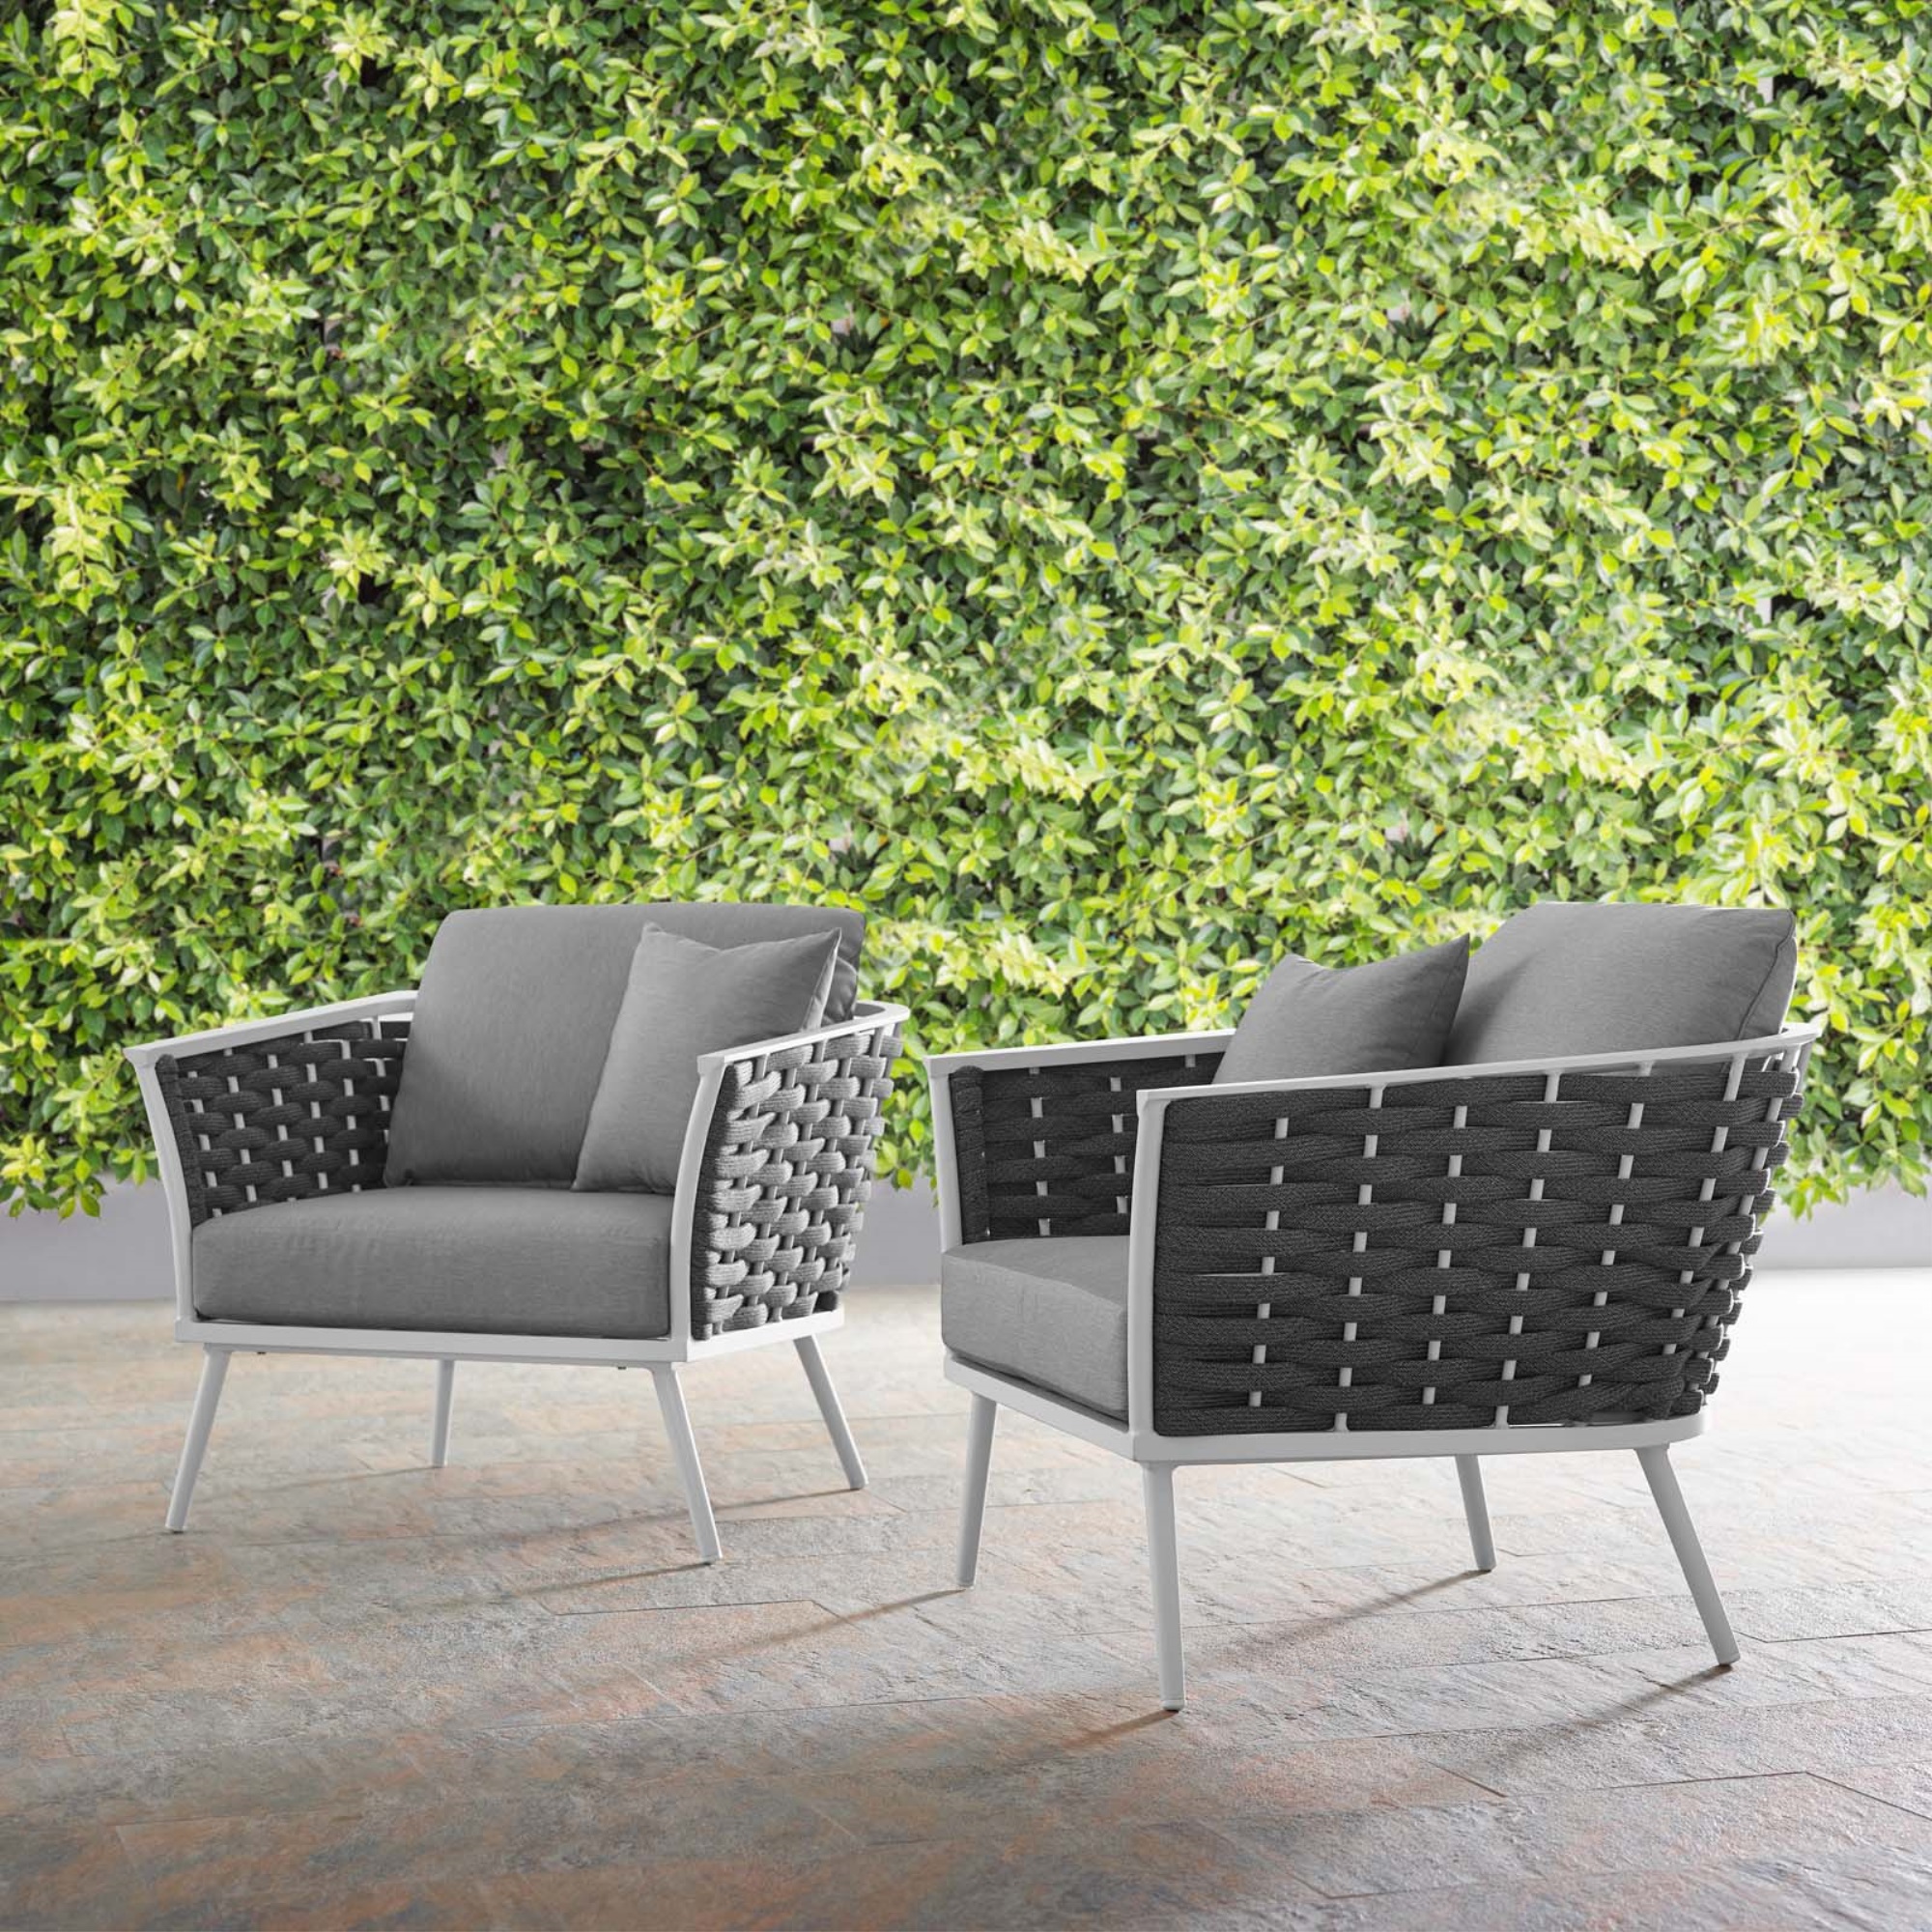 Ergode Stance Armchair Outdoor Patio Aluminum Set of 2 - White Gray